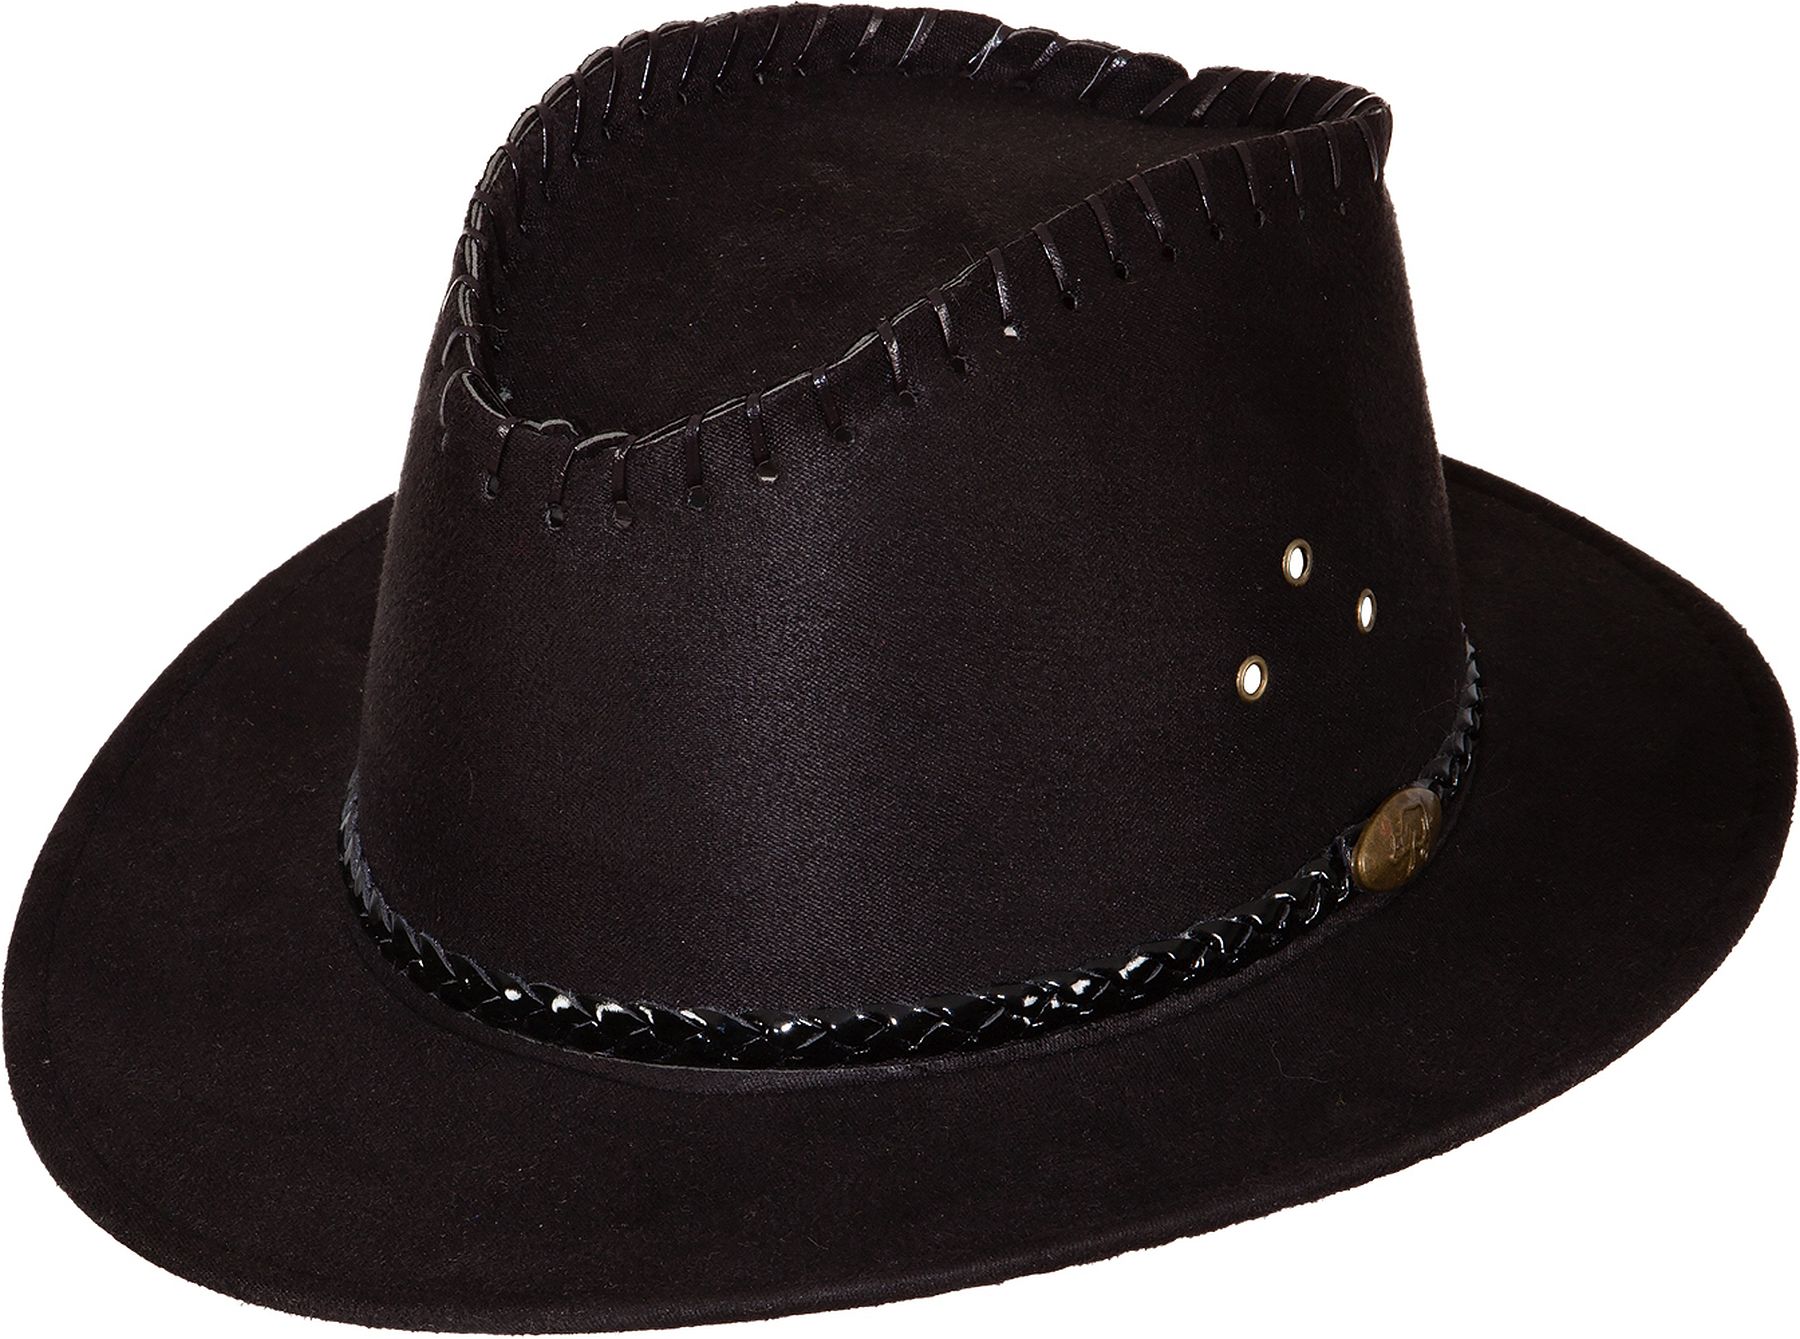 Cowgirl hat, black